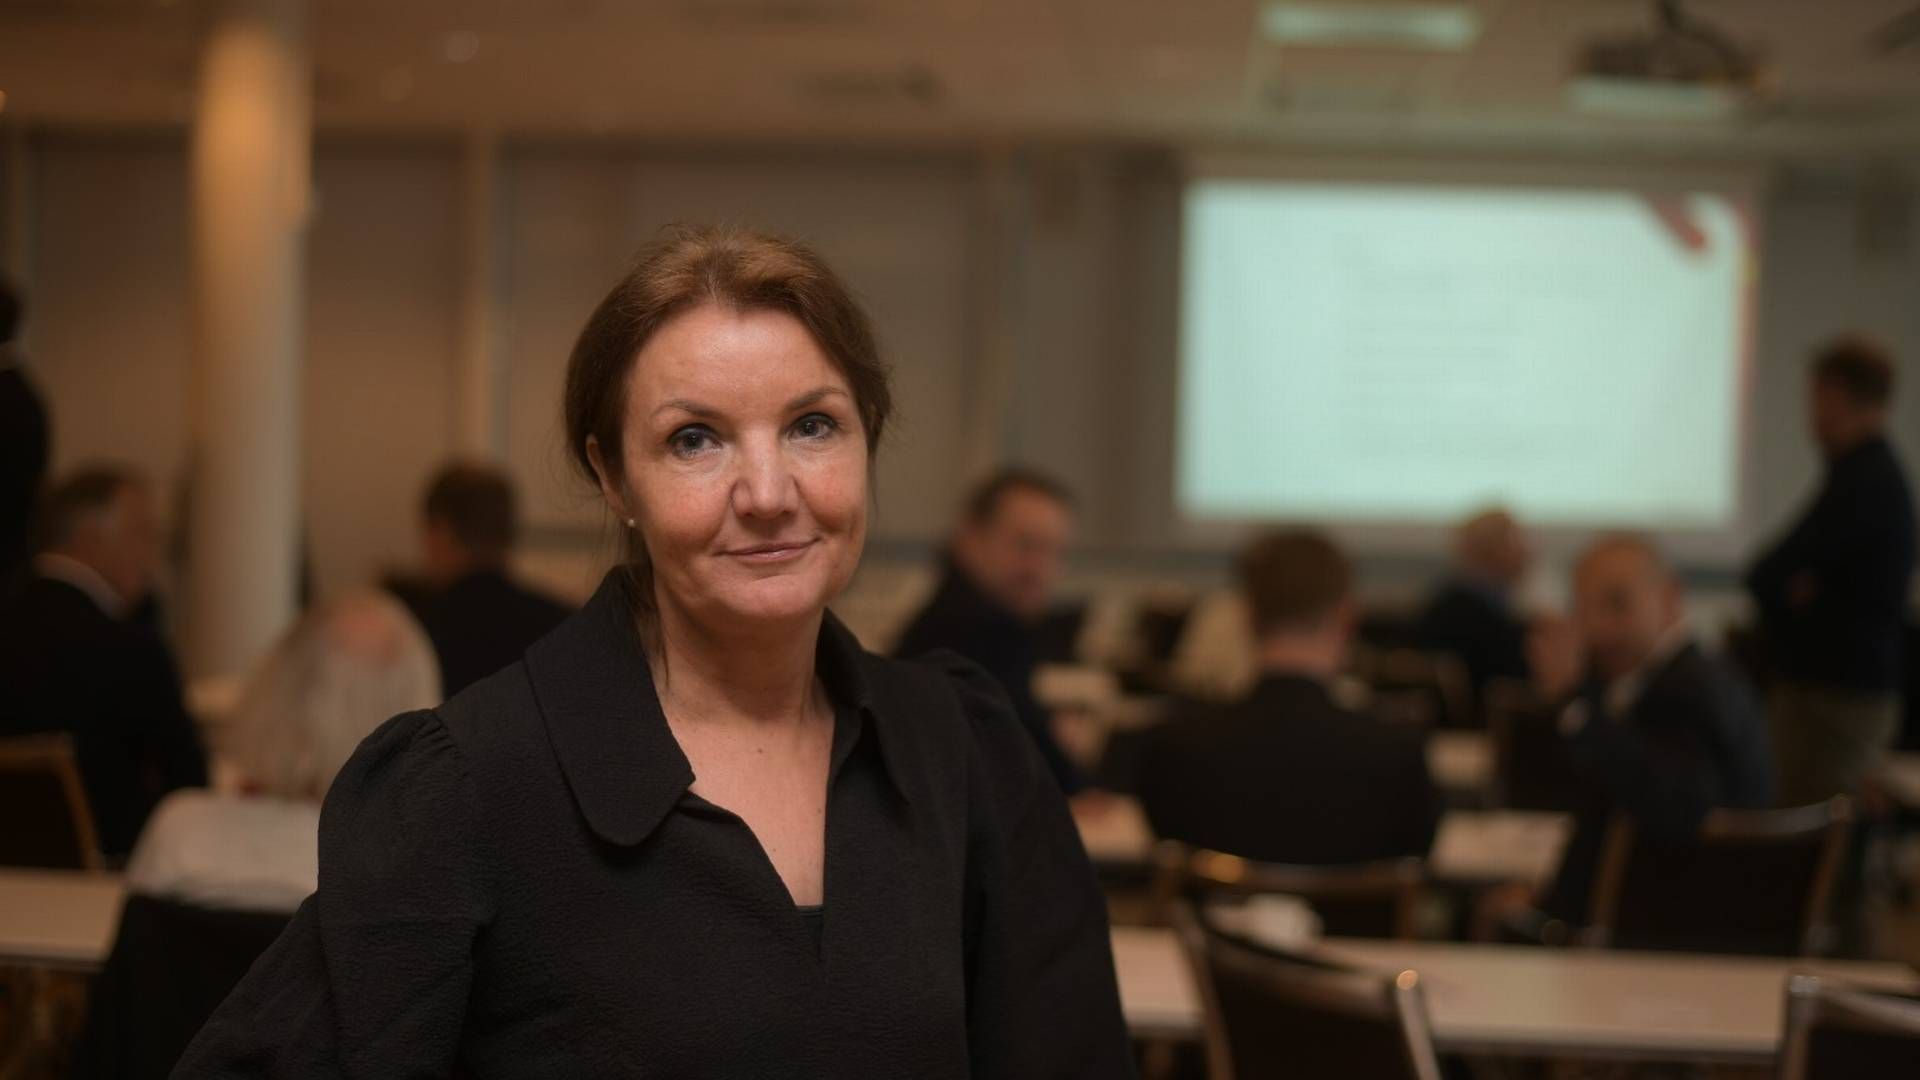 TAPTE SLAGET: Administrerende direktør Malene Brondberg må konstatere at slaget om sammenslåing er tapt. | Foto: Vidar Sandnes